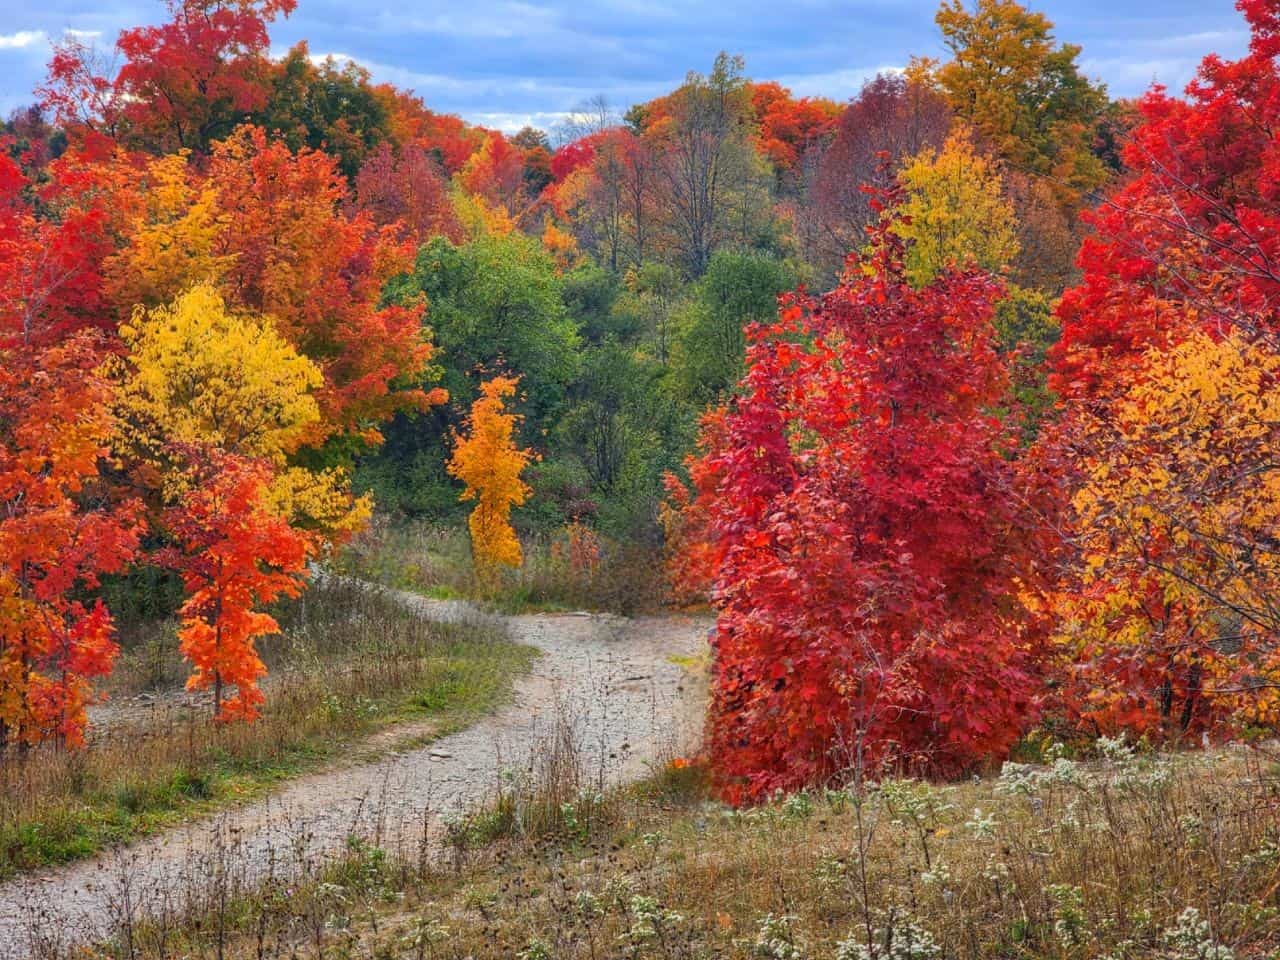 Autumn colors of October in Ontario Canada.